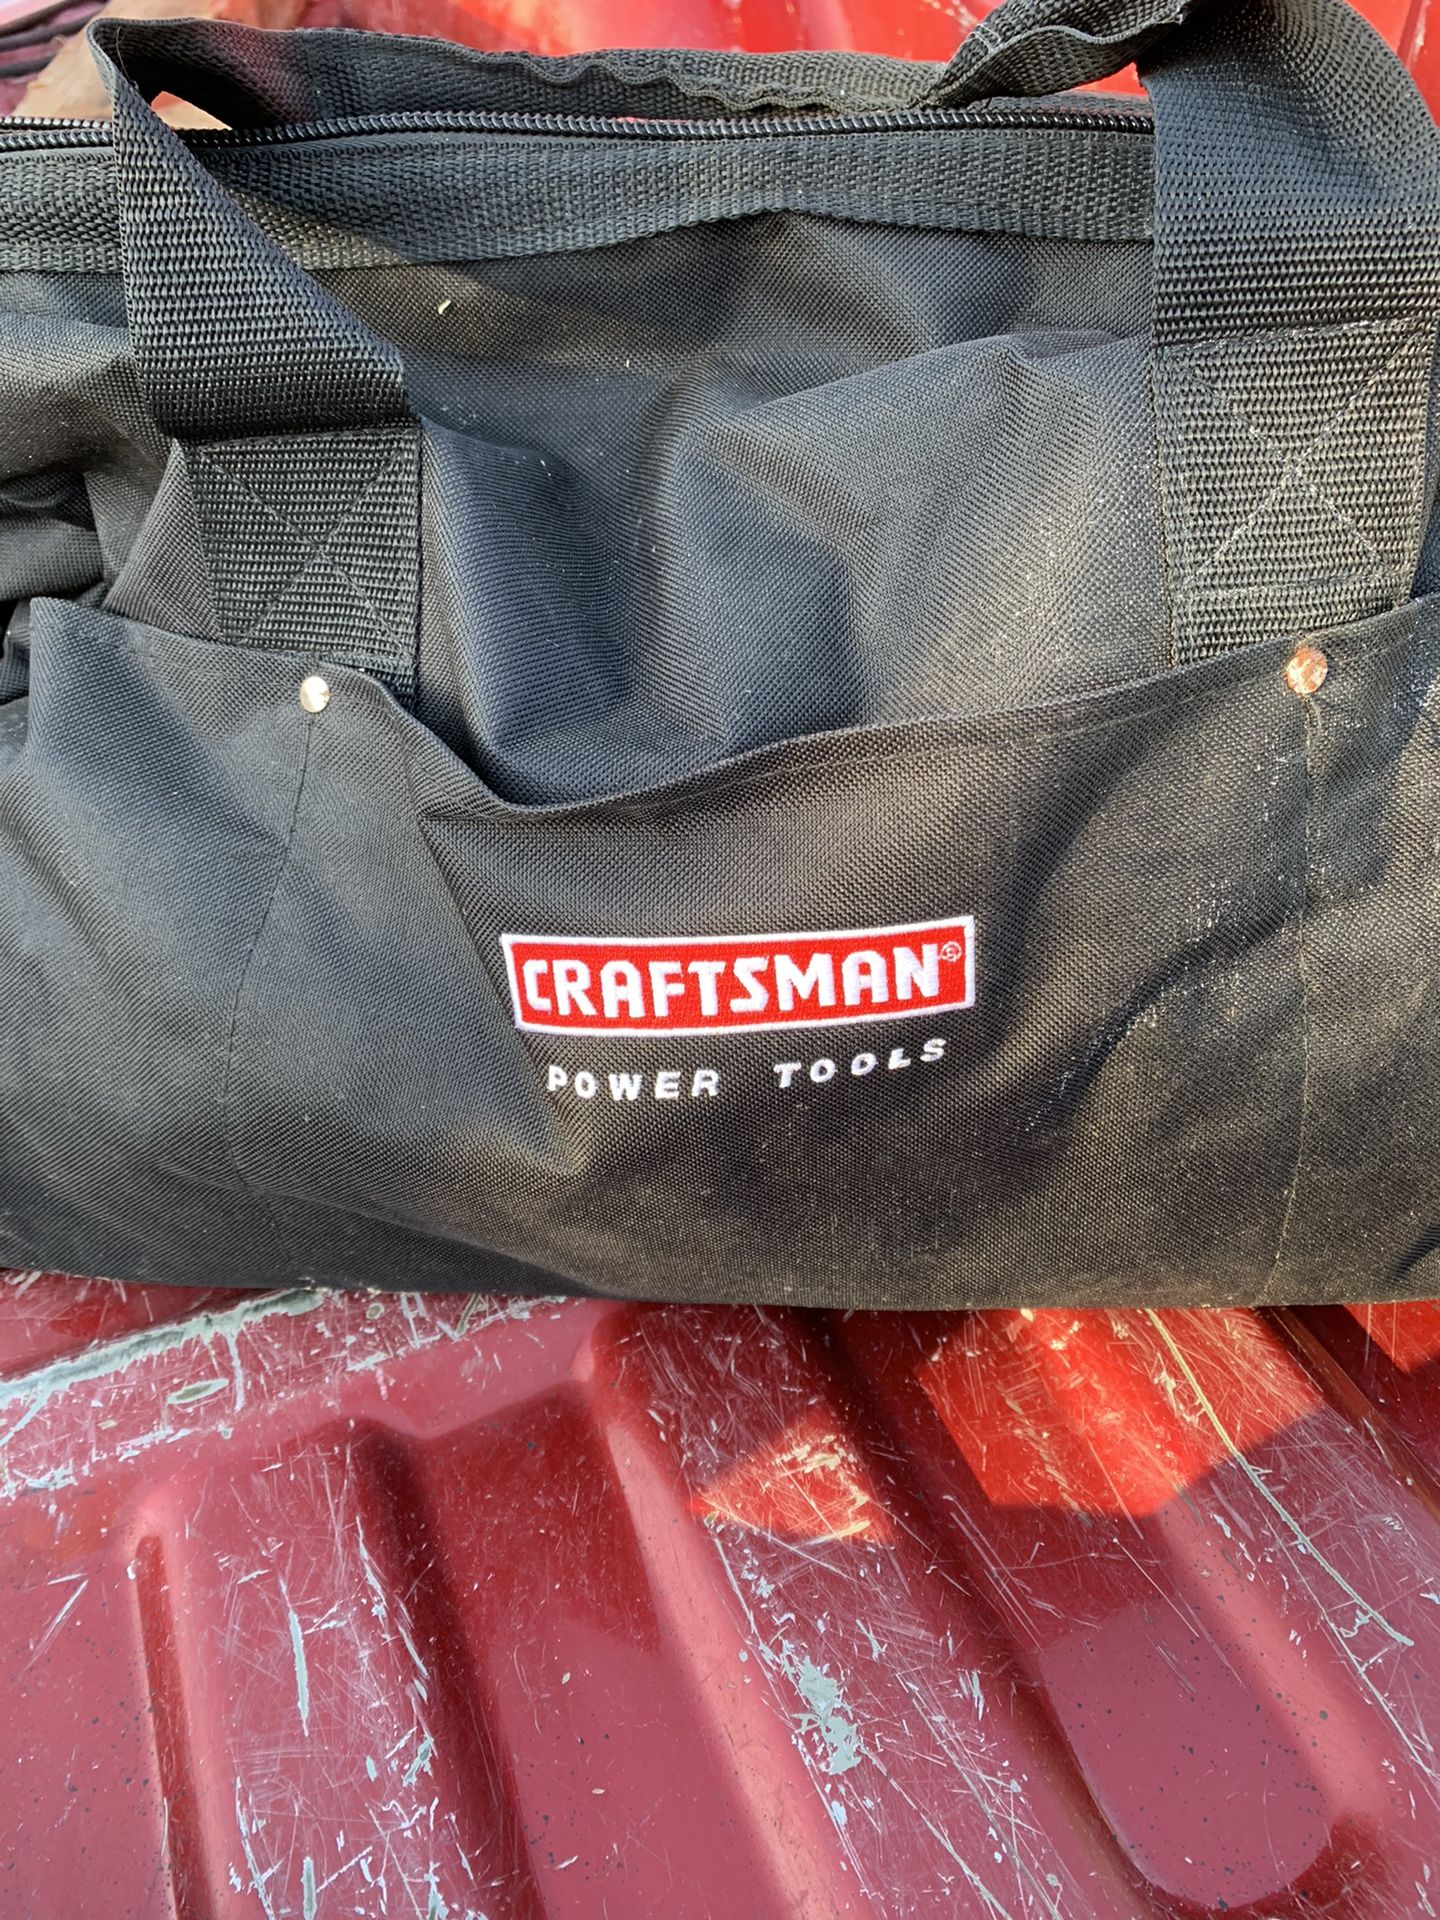 Craftsman cordless power tools